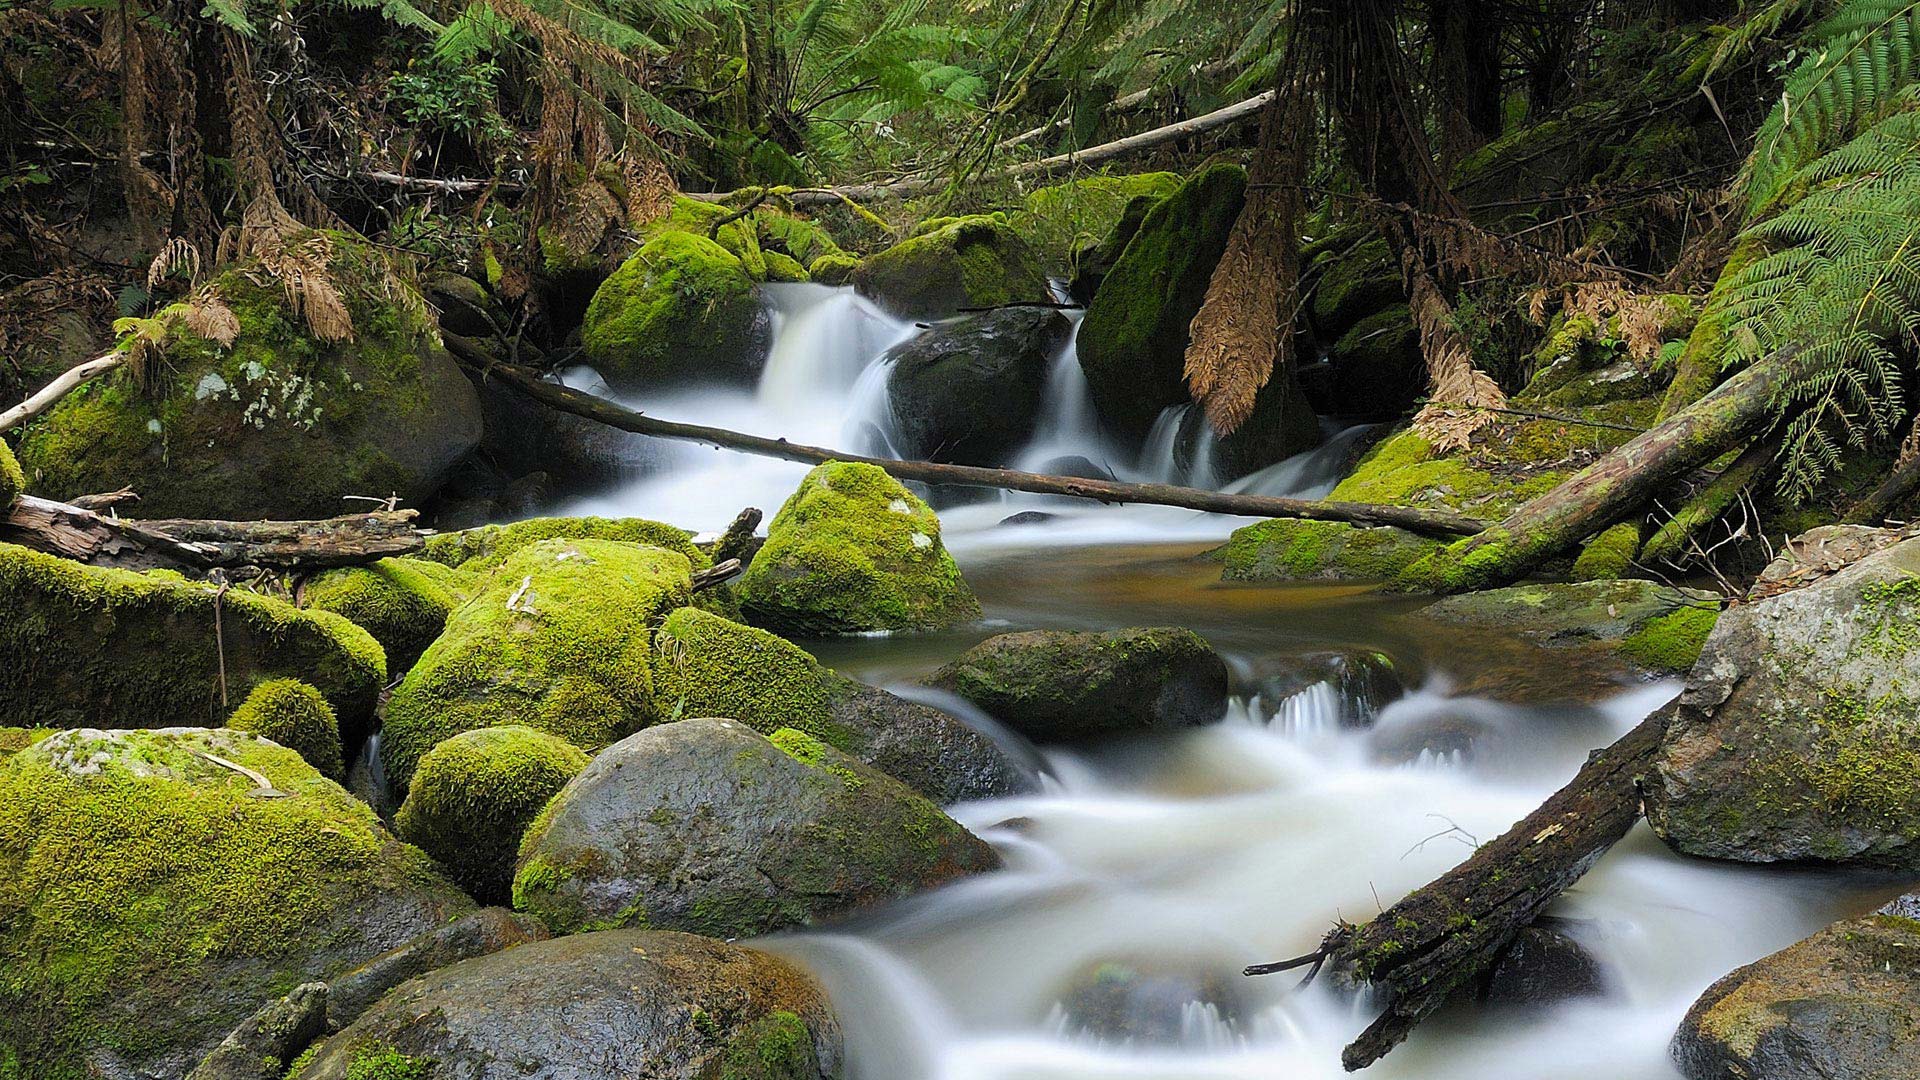 Descarga gratis la imagen Naturaleza, Agua, Bosque, Australia, Chorro, Tierra/naturaleza en el escritorio de tu PC